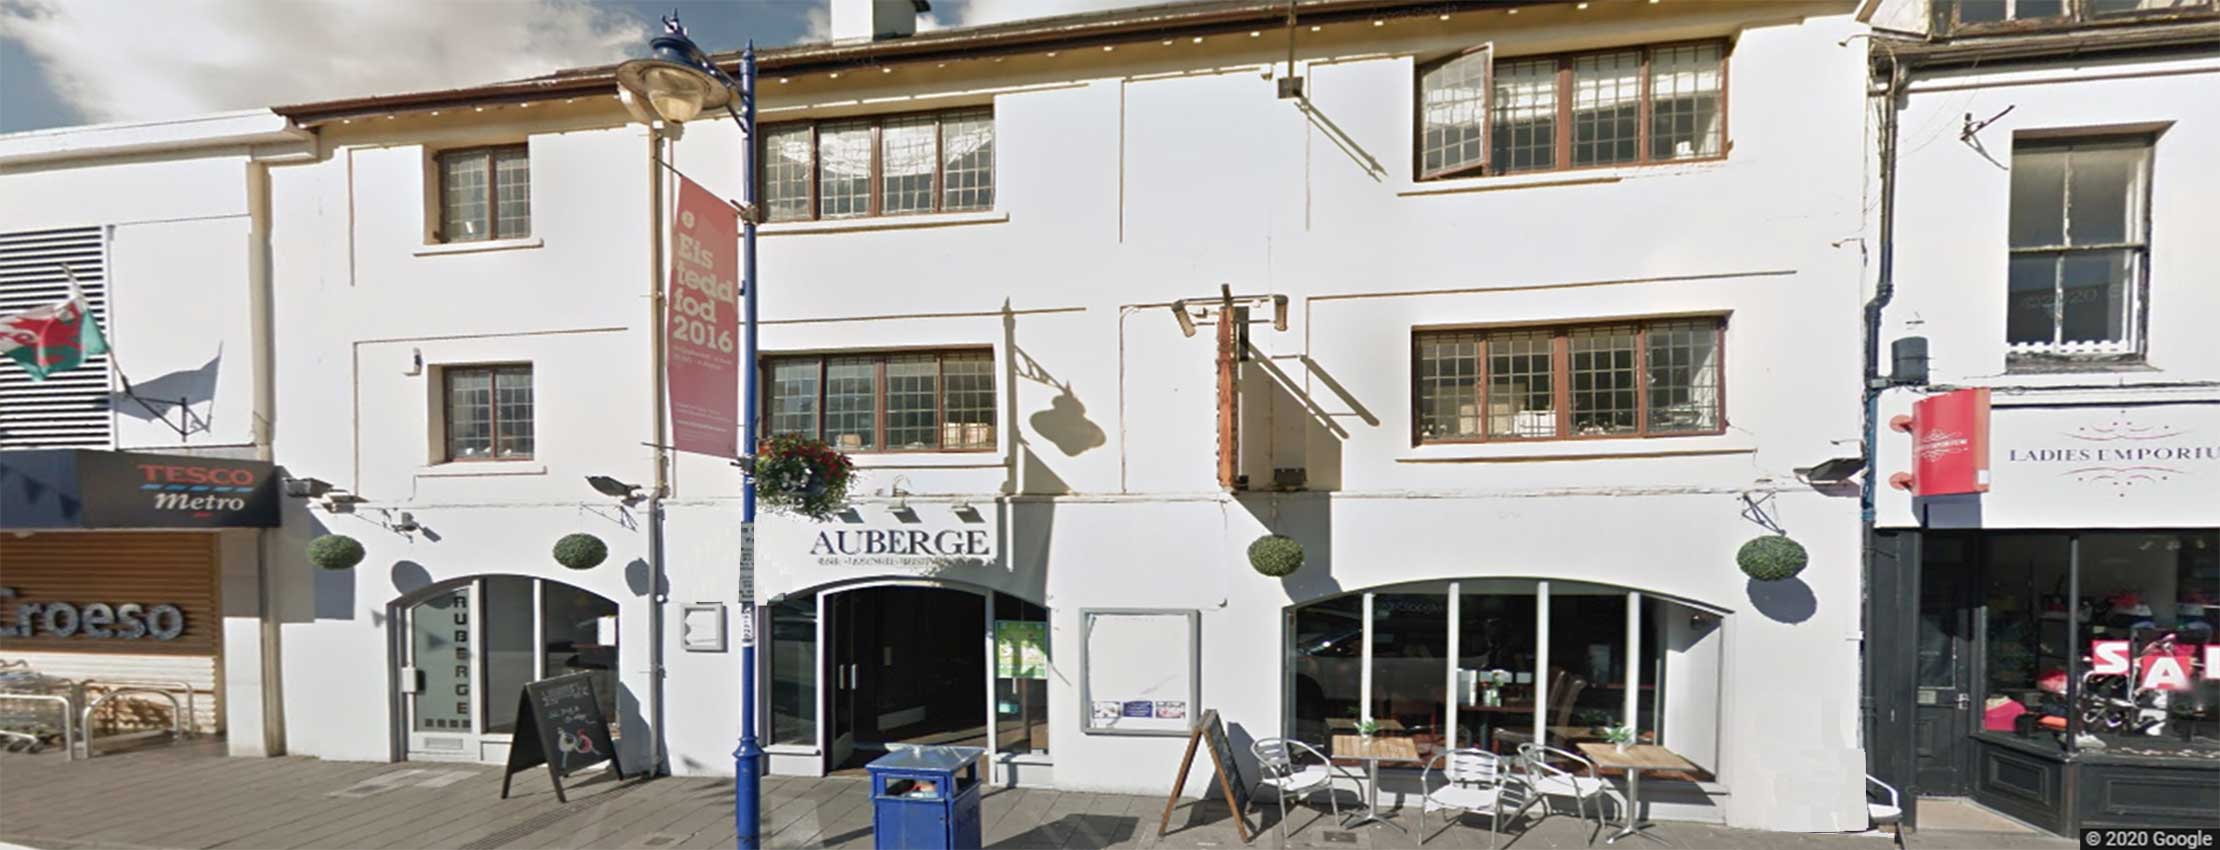 Auberge Bar & Restaurant,Abergavenny